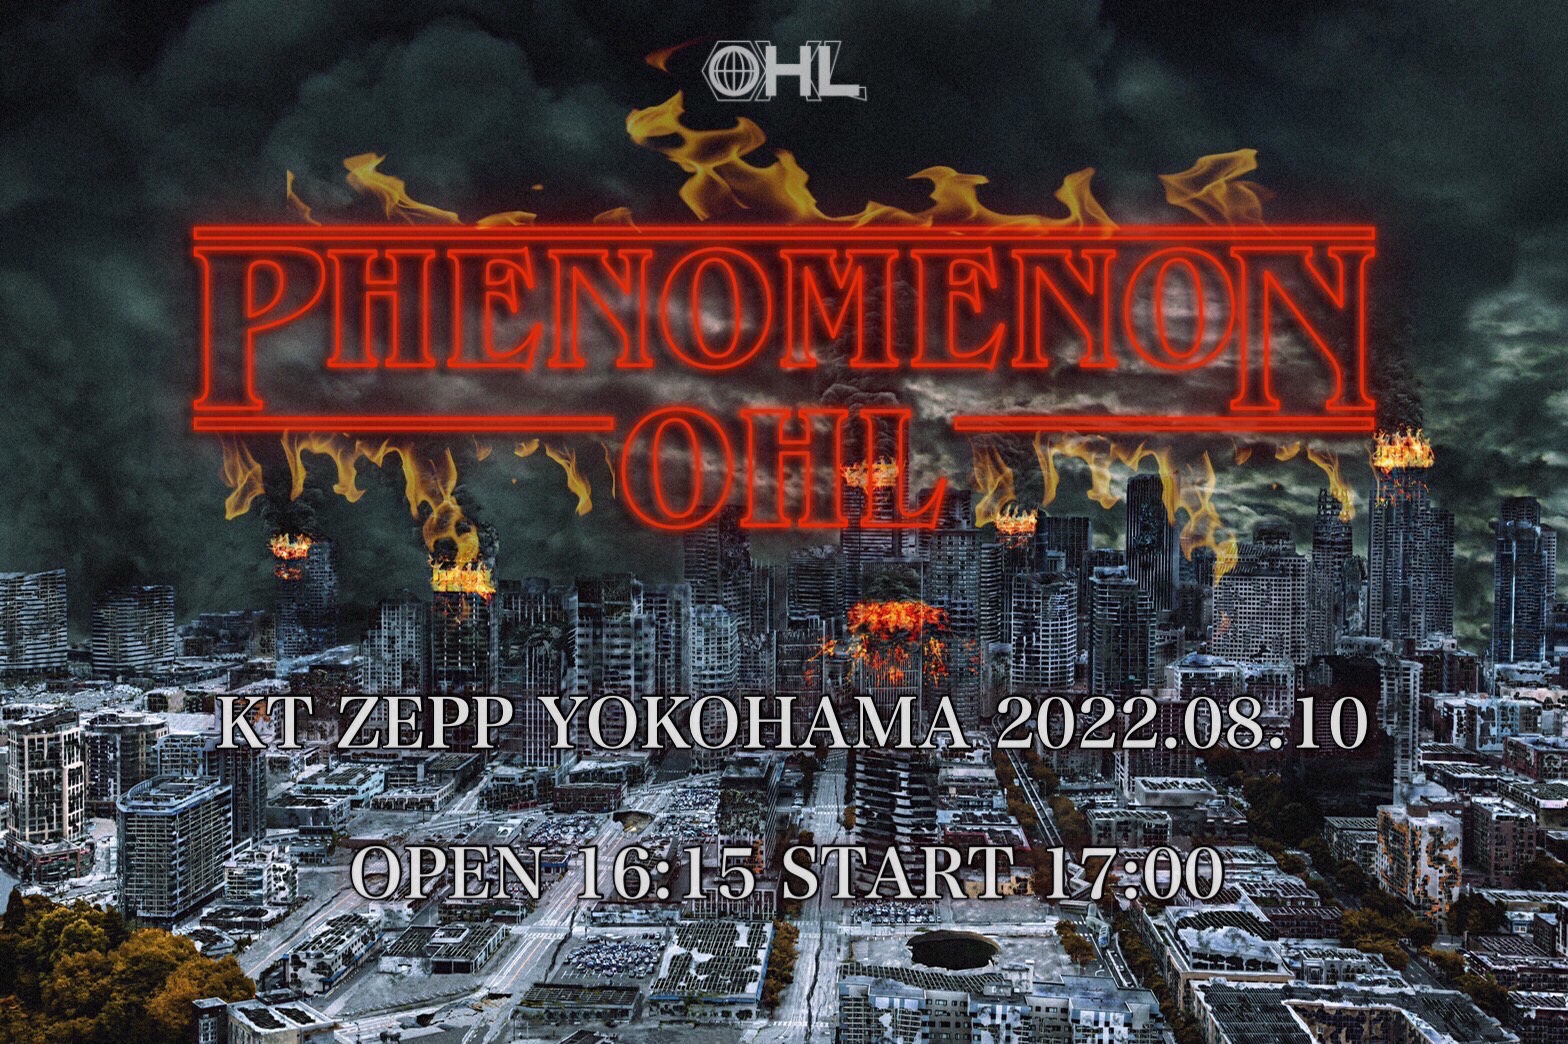 OHL ONE MAN LIVE -PHENOMENON-